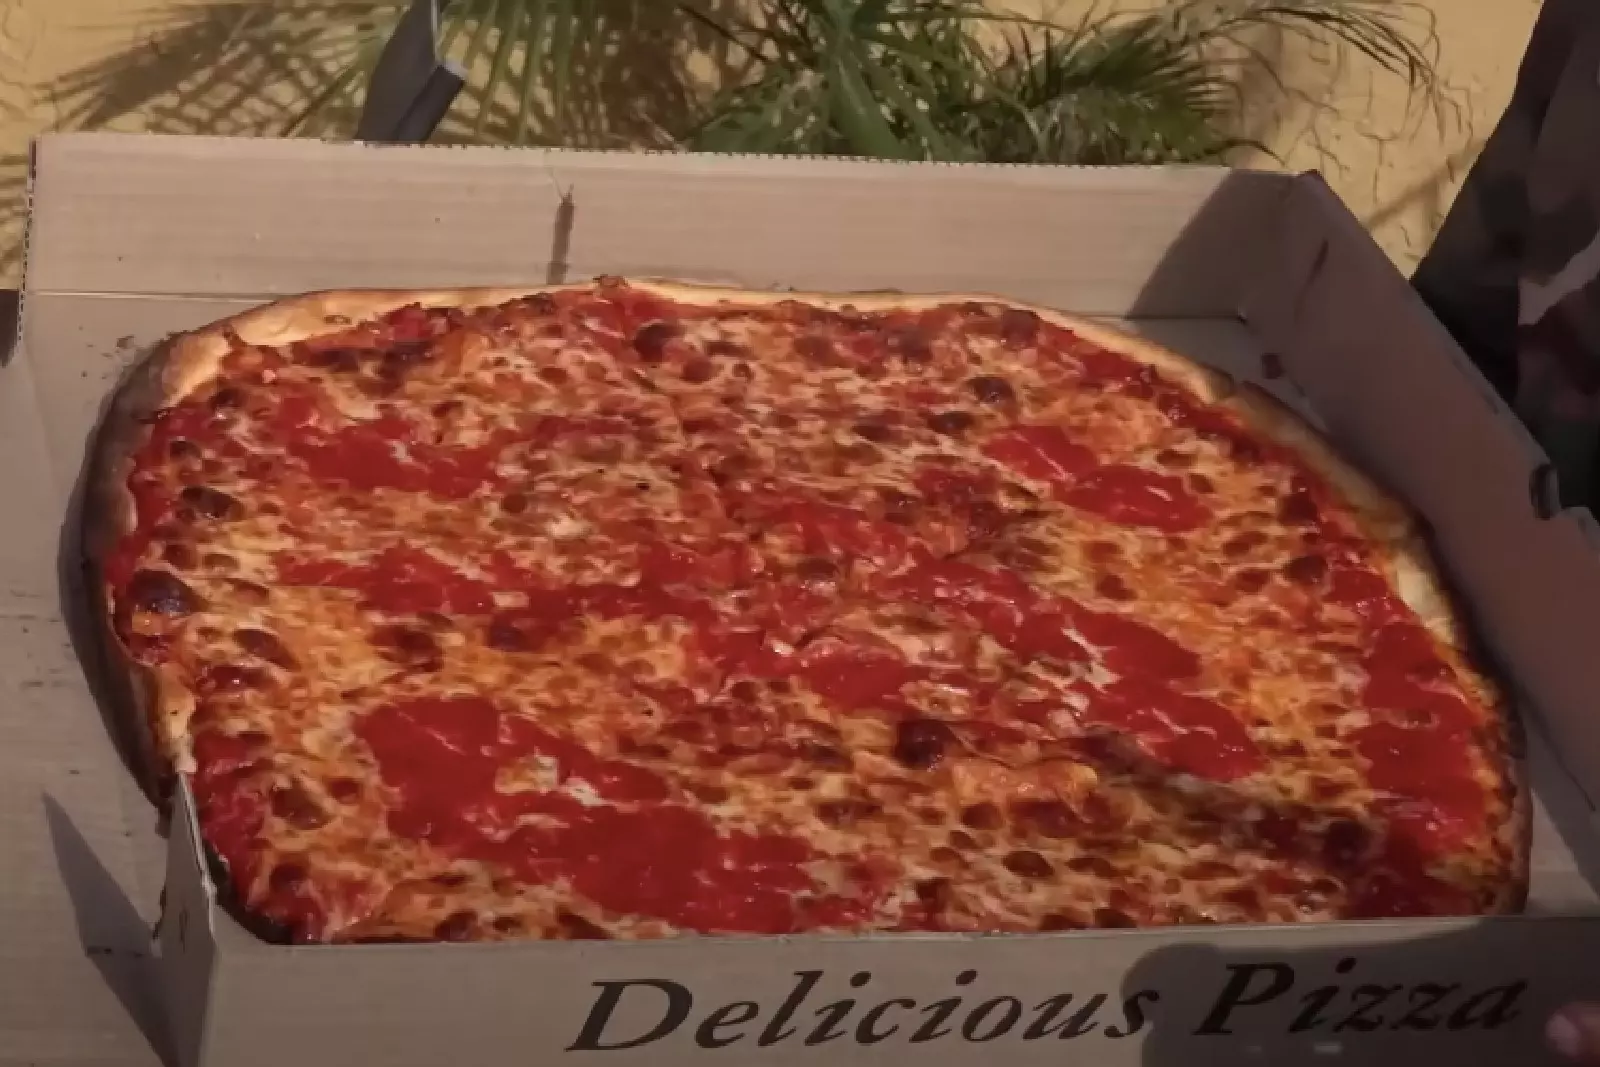 Barstool Sports' Dave Portnoy reviews Little Falls, NJ pizzeria